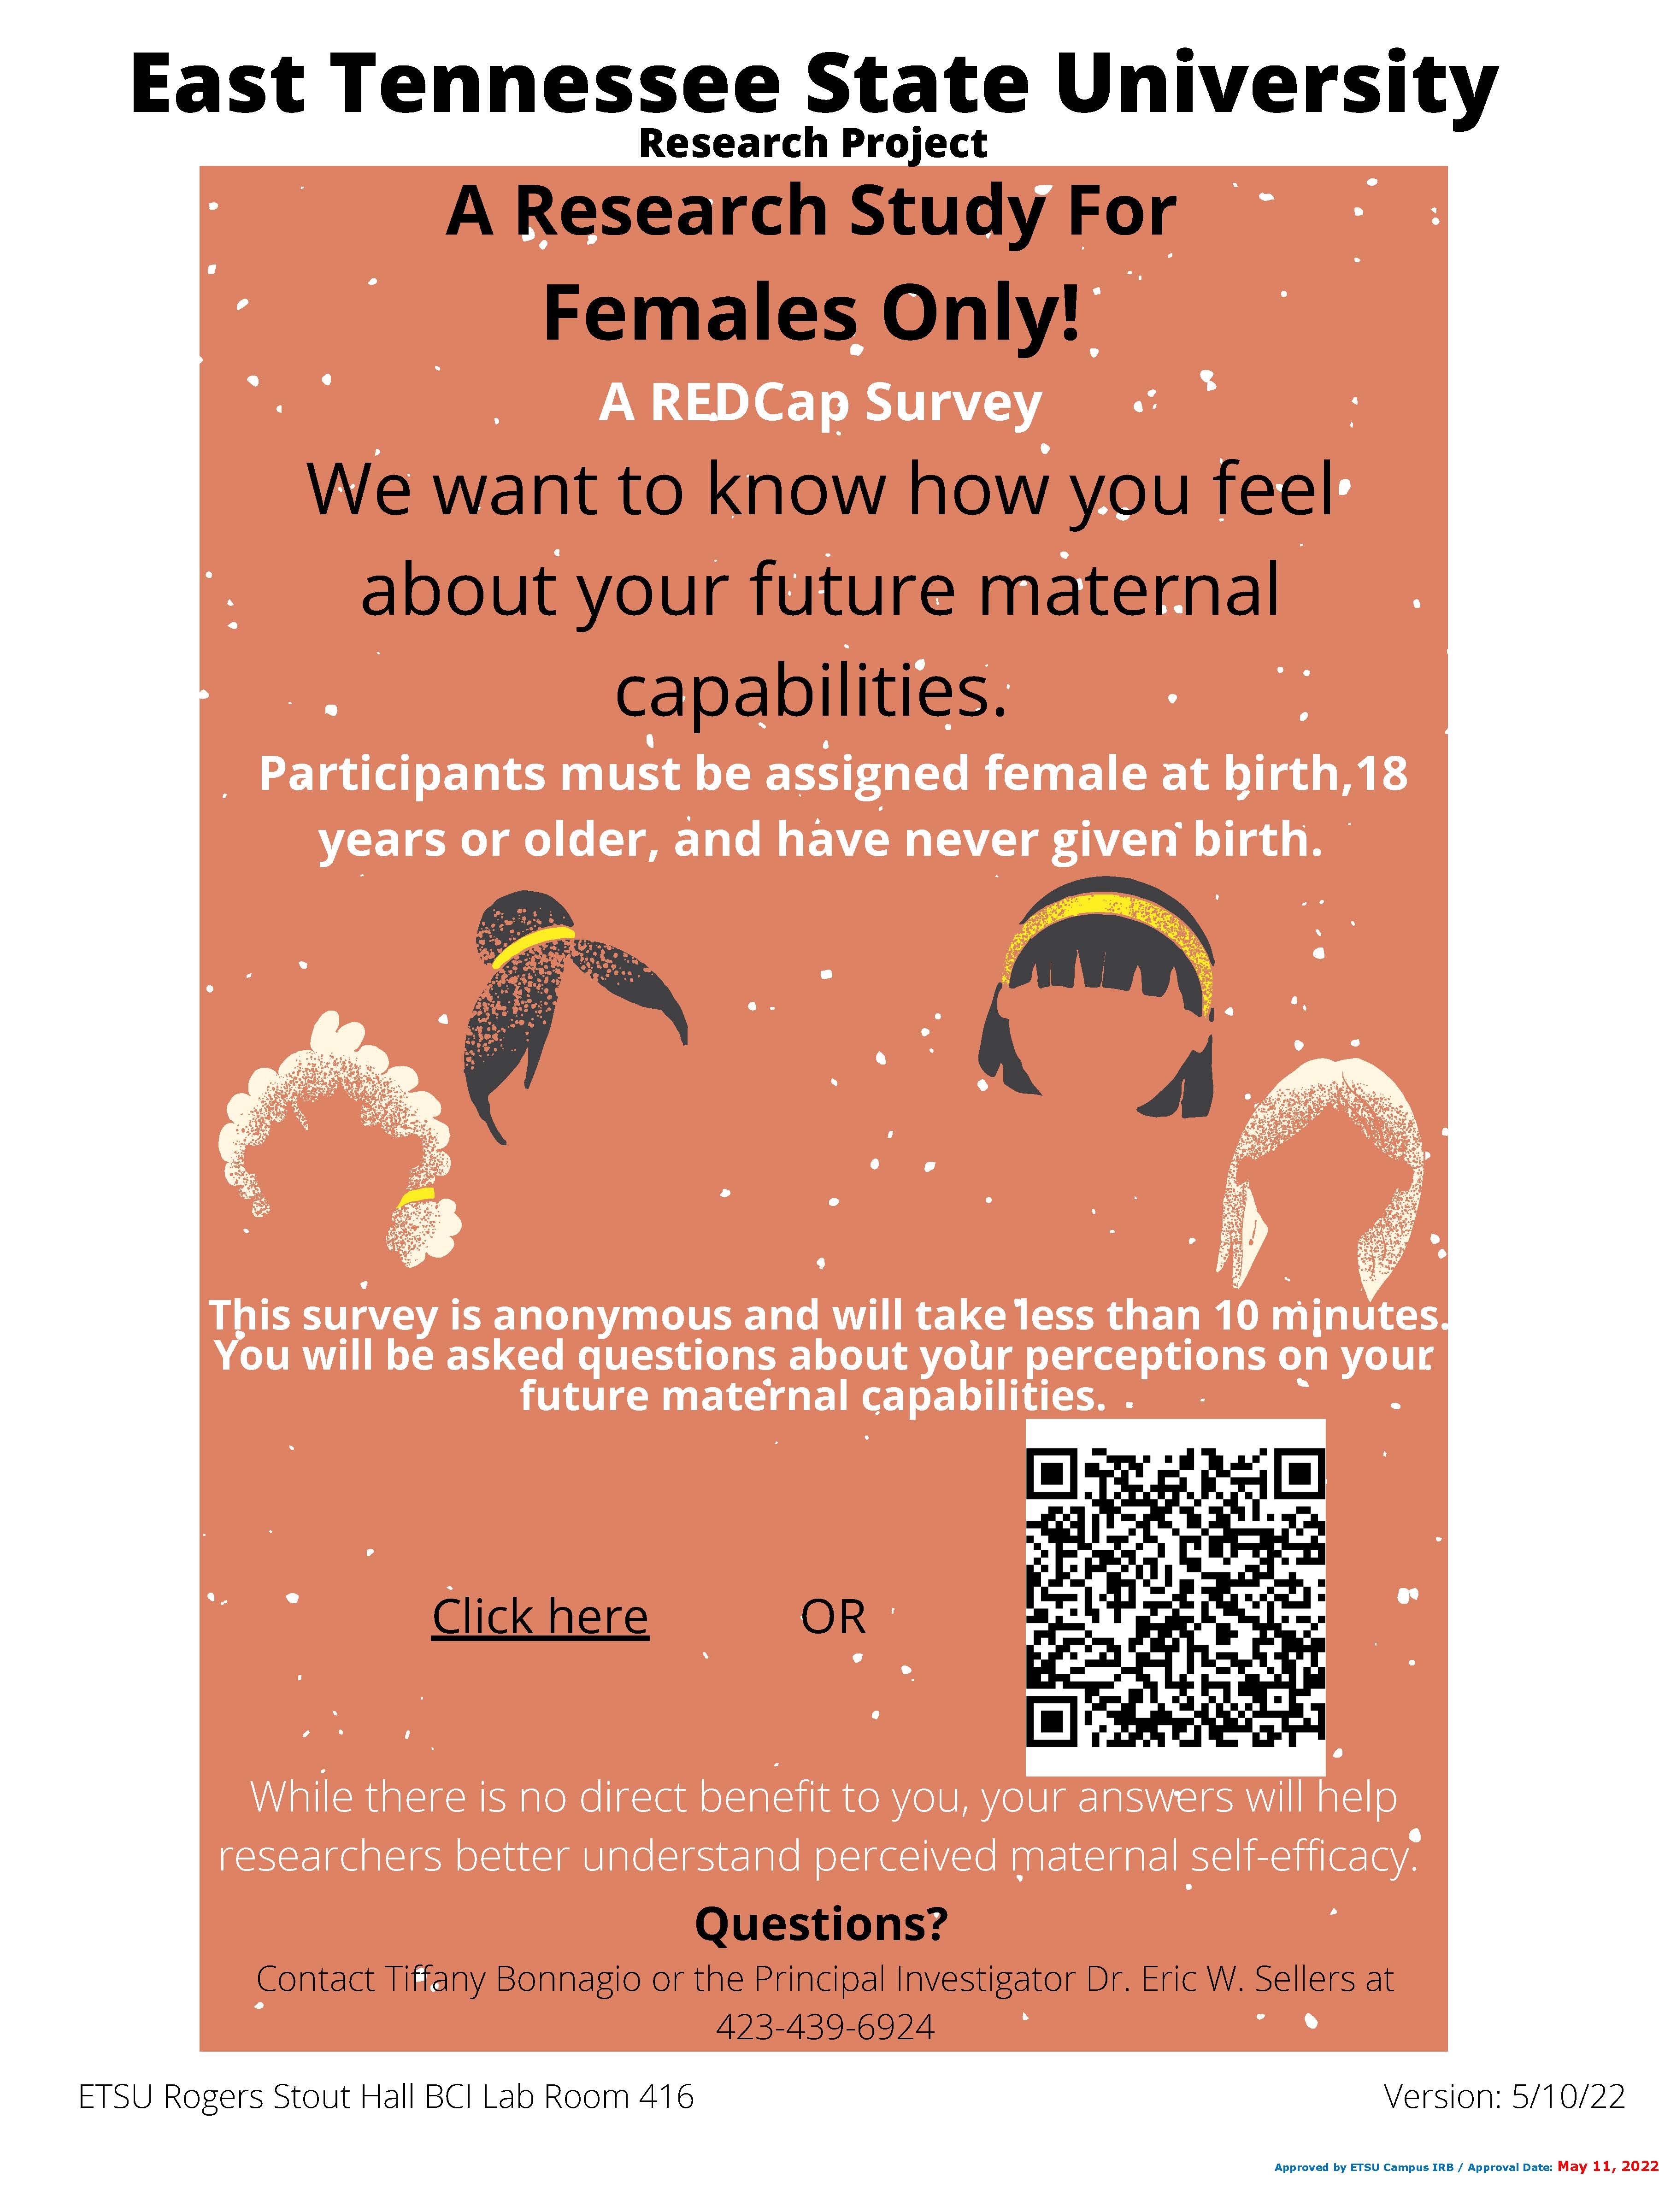 Maternity Capability Poster